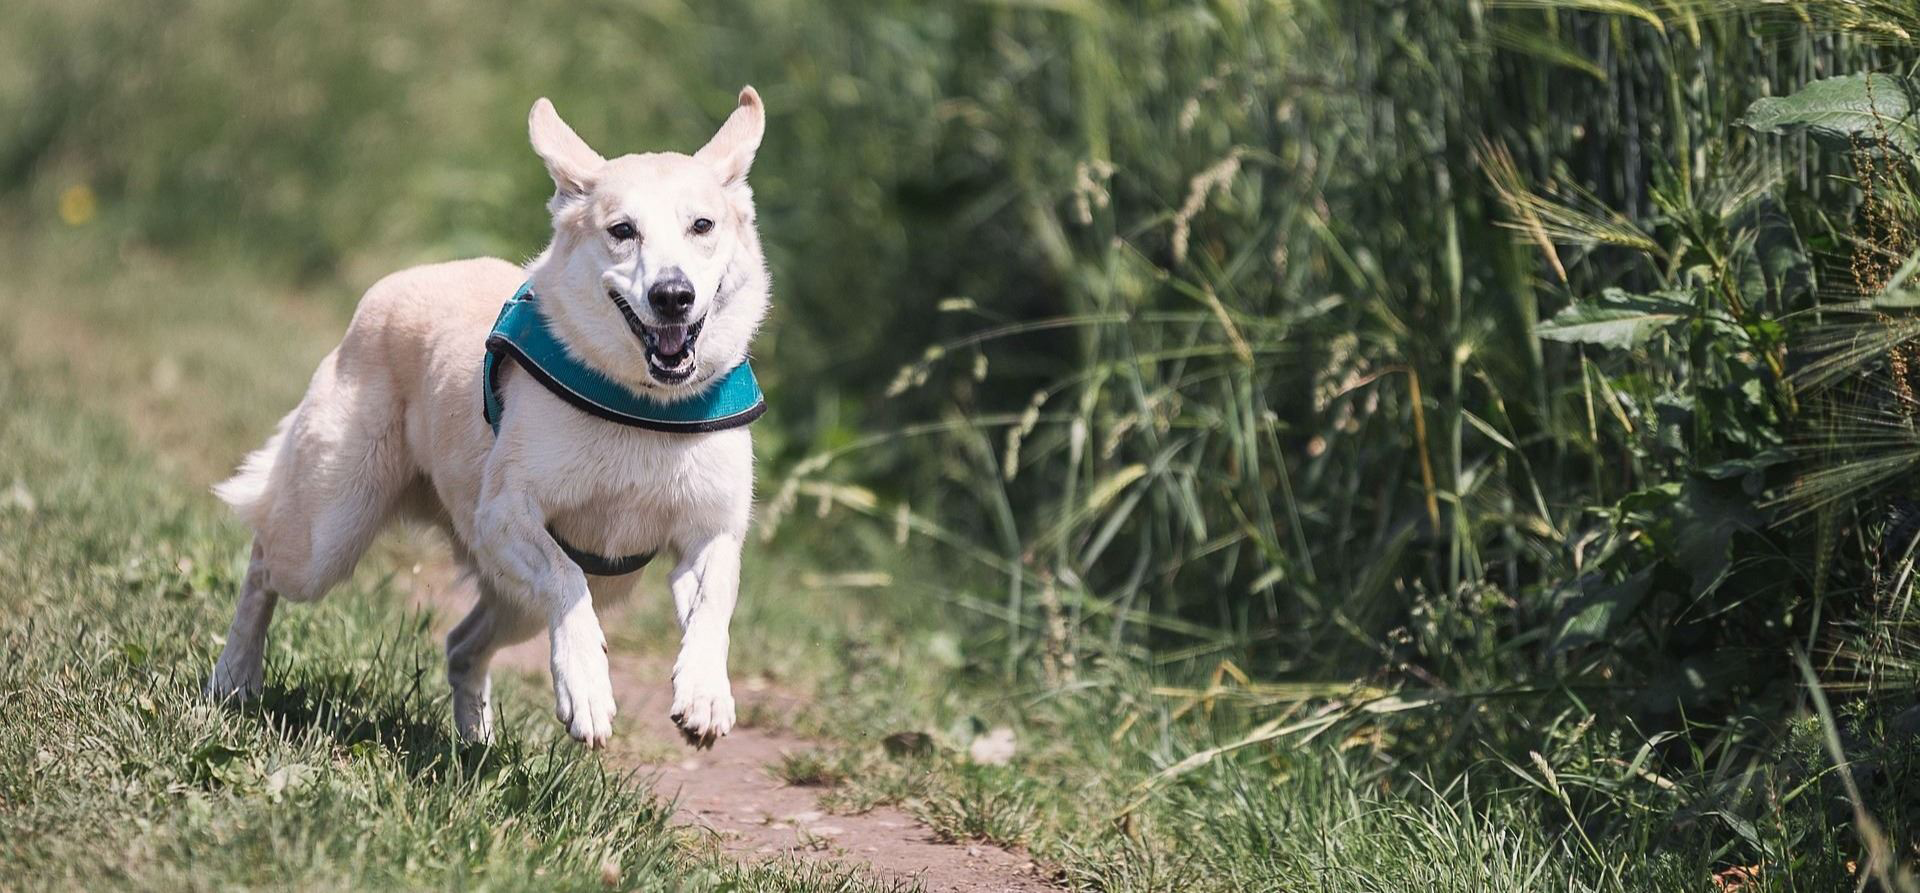 Happy dog running through a field